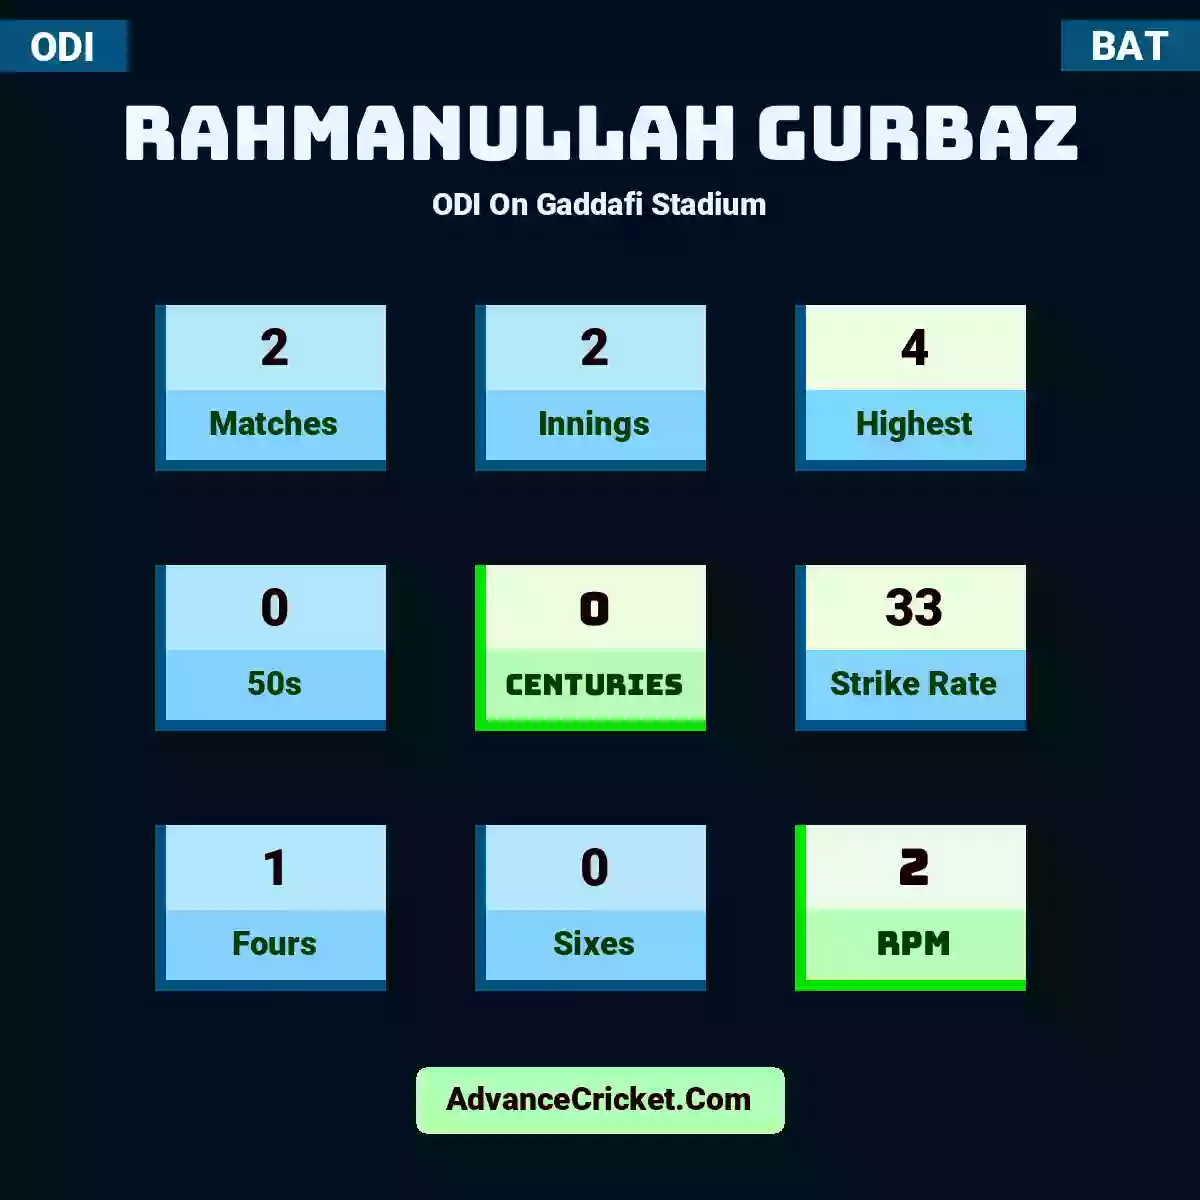 Rahmanullah Gurbaz ODI  On Gaddafi Stadium, Rahmanullah Gurbaz played 2 matches, scored 4 runs as highest, 0 half-centuries, and 0 centuries, with a strike rate of 33. R.Gurbaz hit 1 fours and 0 sixes, with an RPM of 2.